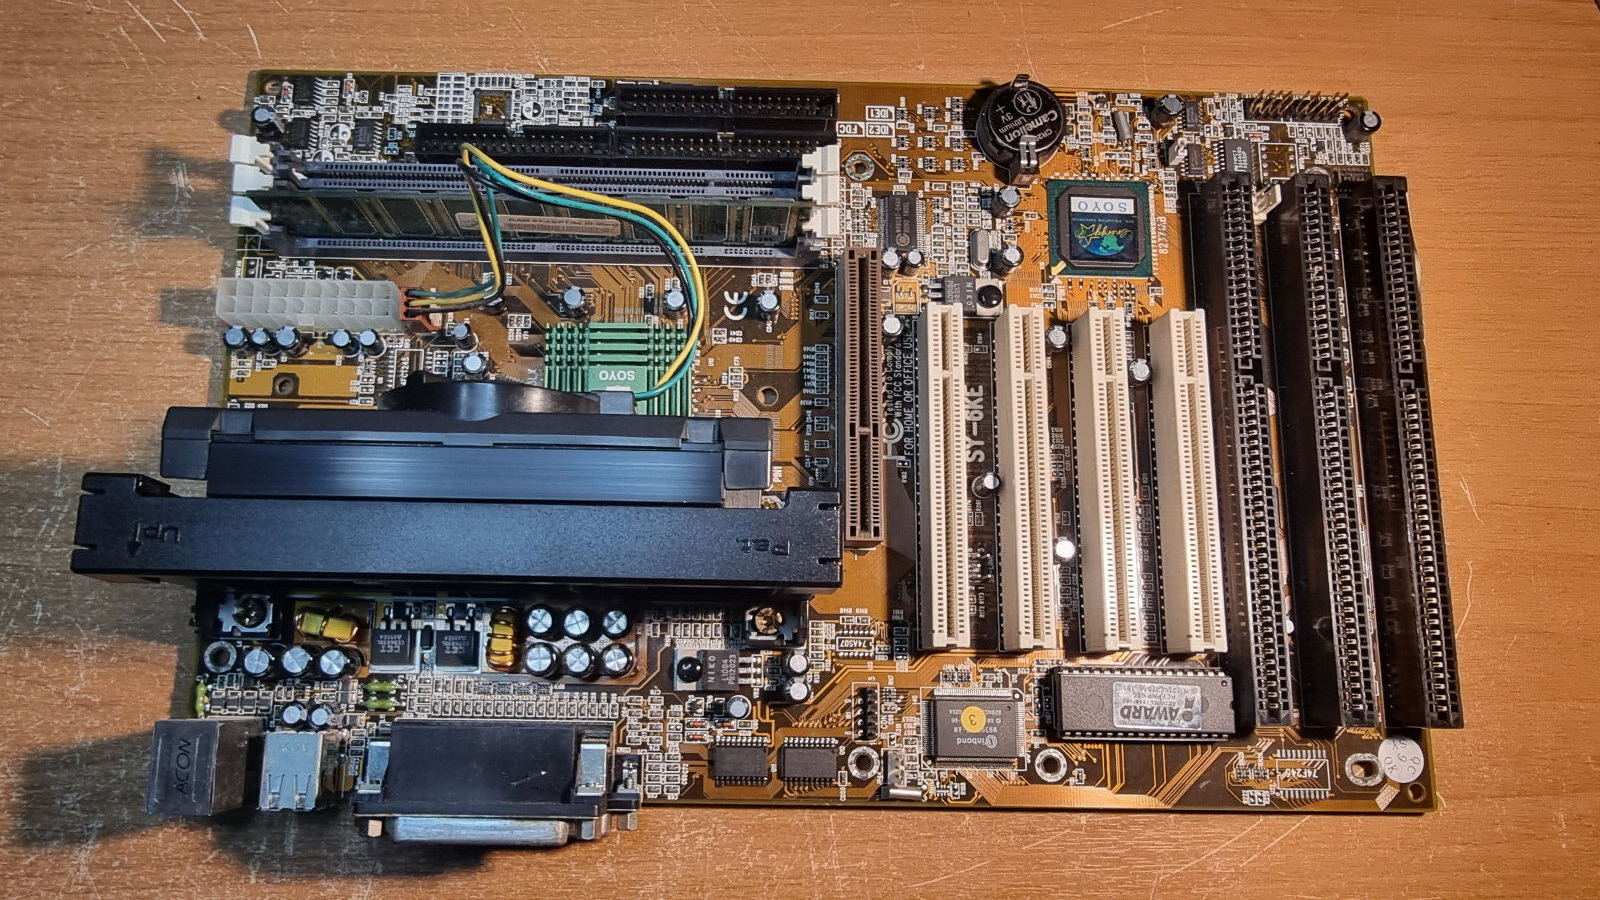 Soyo SY-6KE motherboard + CeleronMMX 333MHz + 64MB Ram